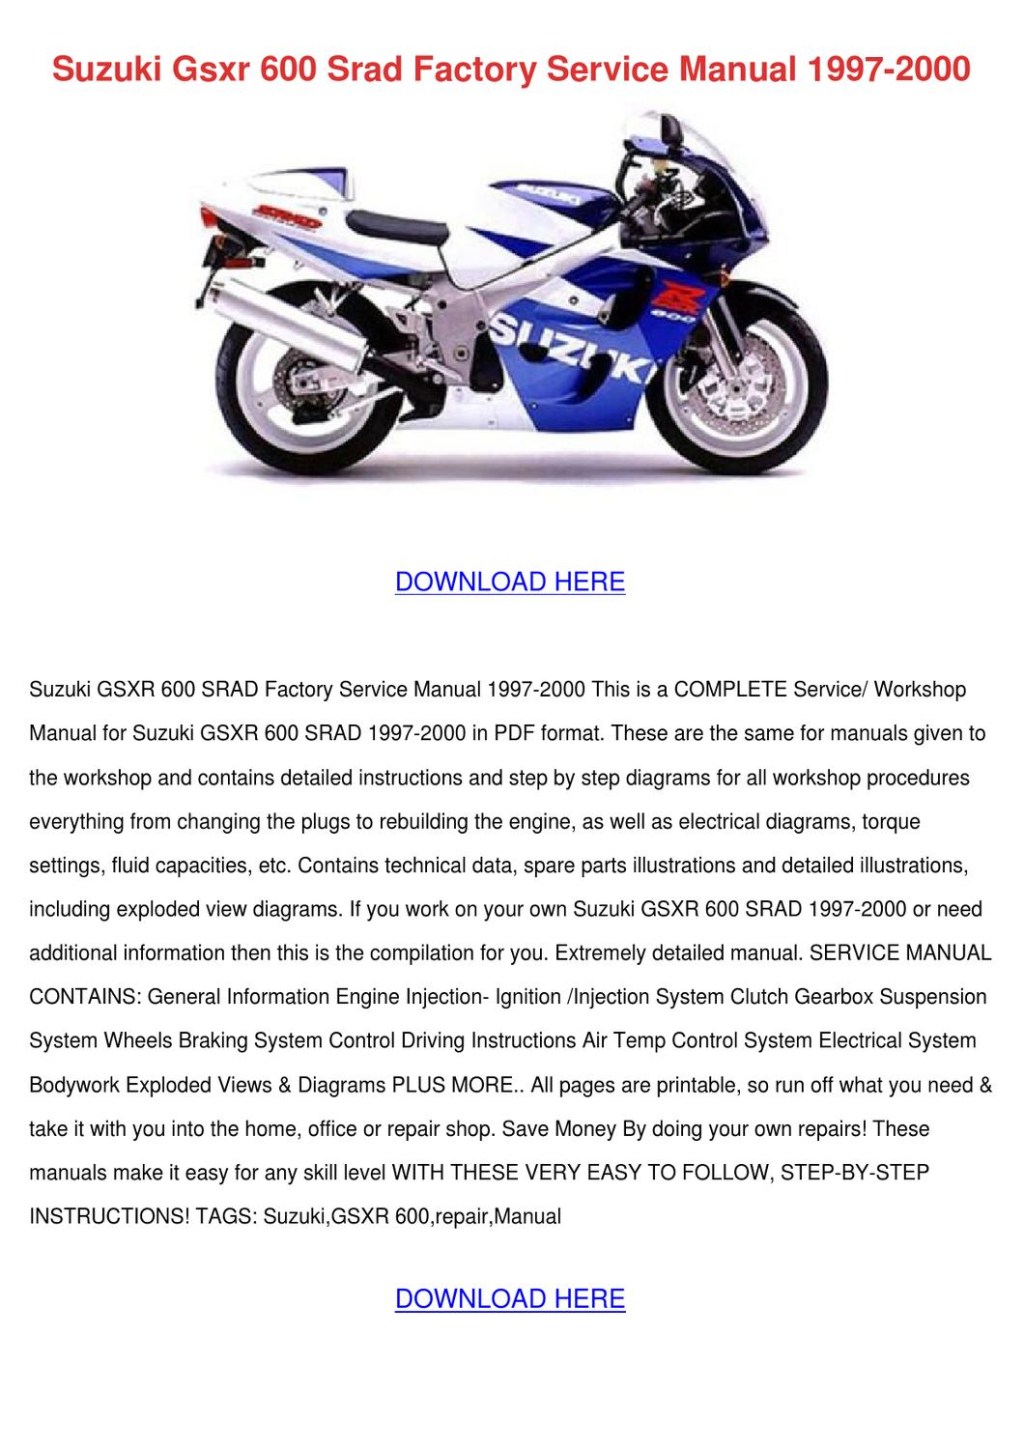 02 suzuki gsxr 600 manual pdf - Suzuki Gsxr  Srad Factory Service Manual  by NelsonNicholson